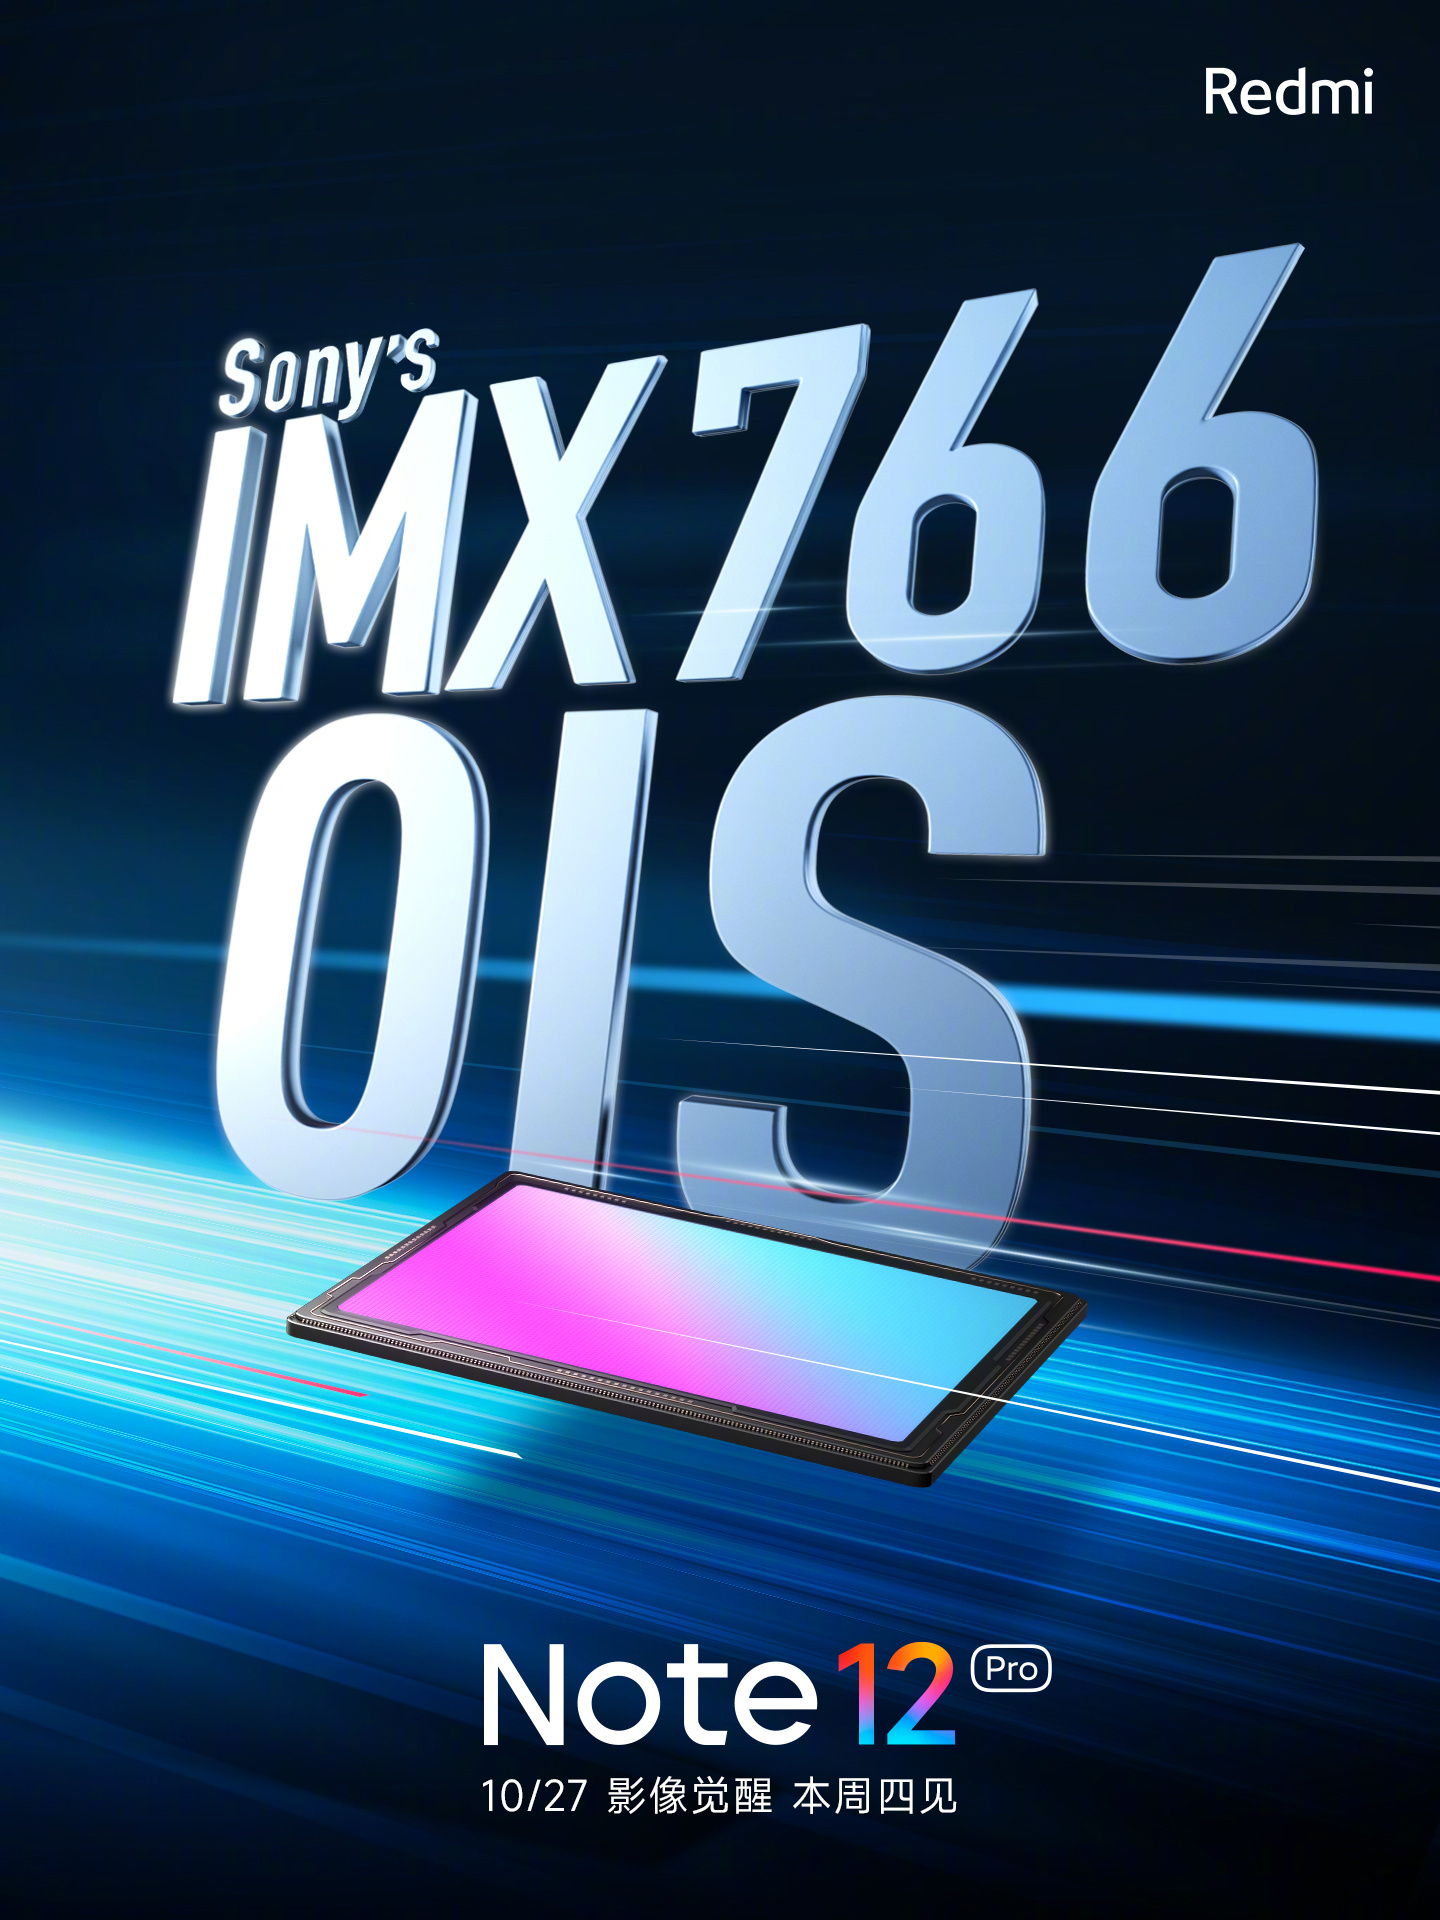 Sony IMX 766 on Redmi Note 12 Pro